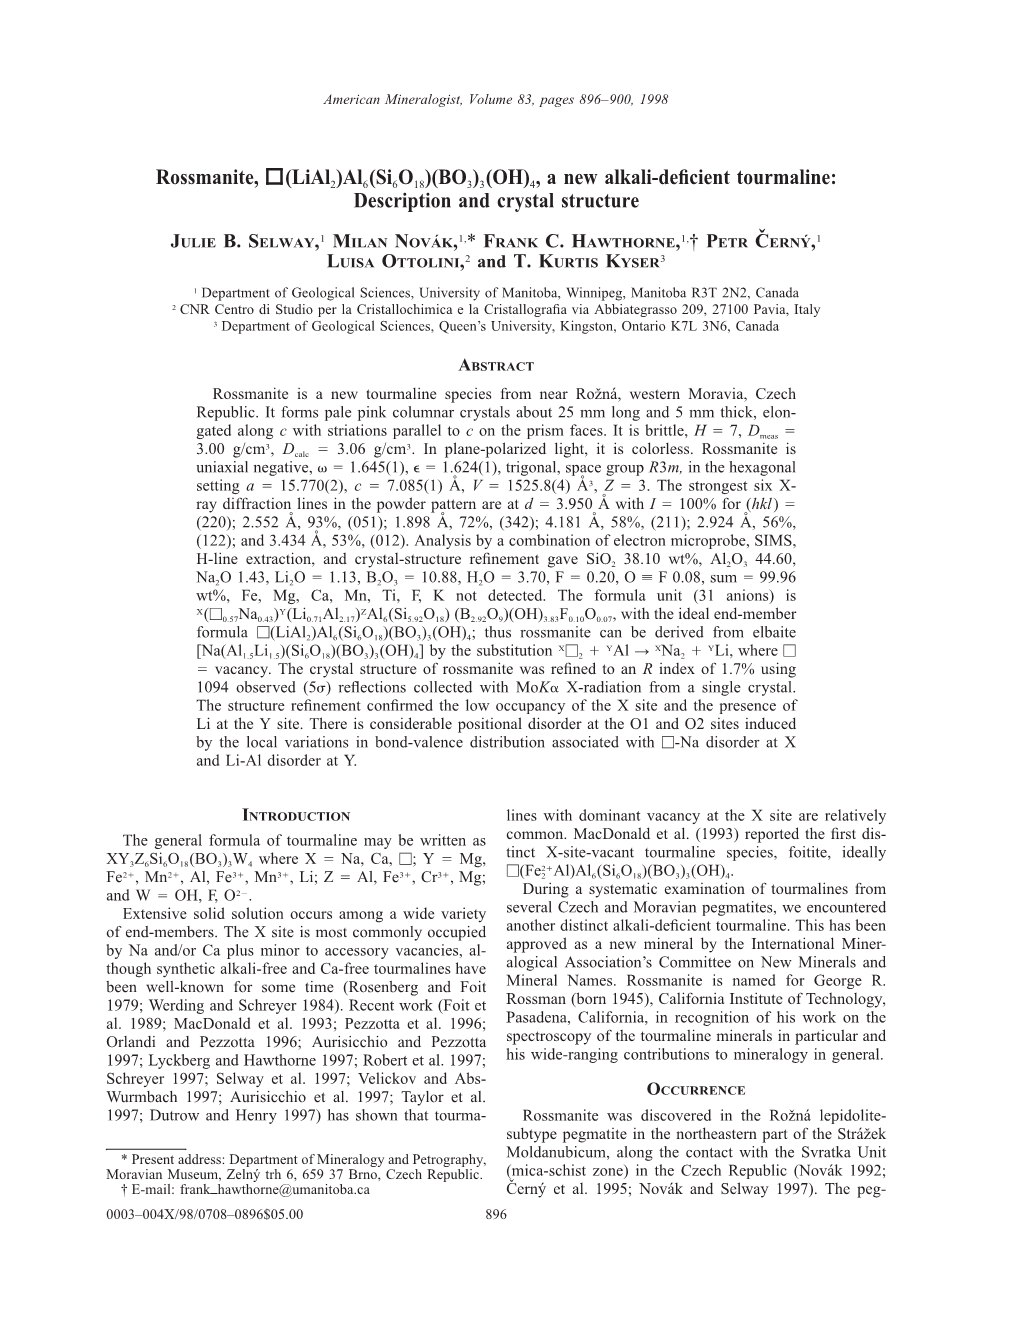 4, a New Alkali-Deficient Tourmaline: Description and Crystal